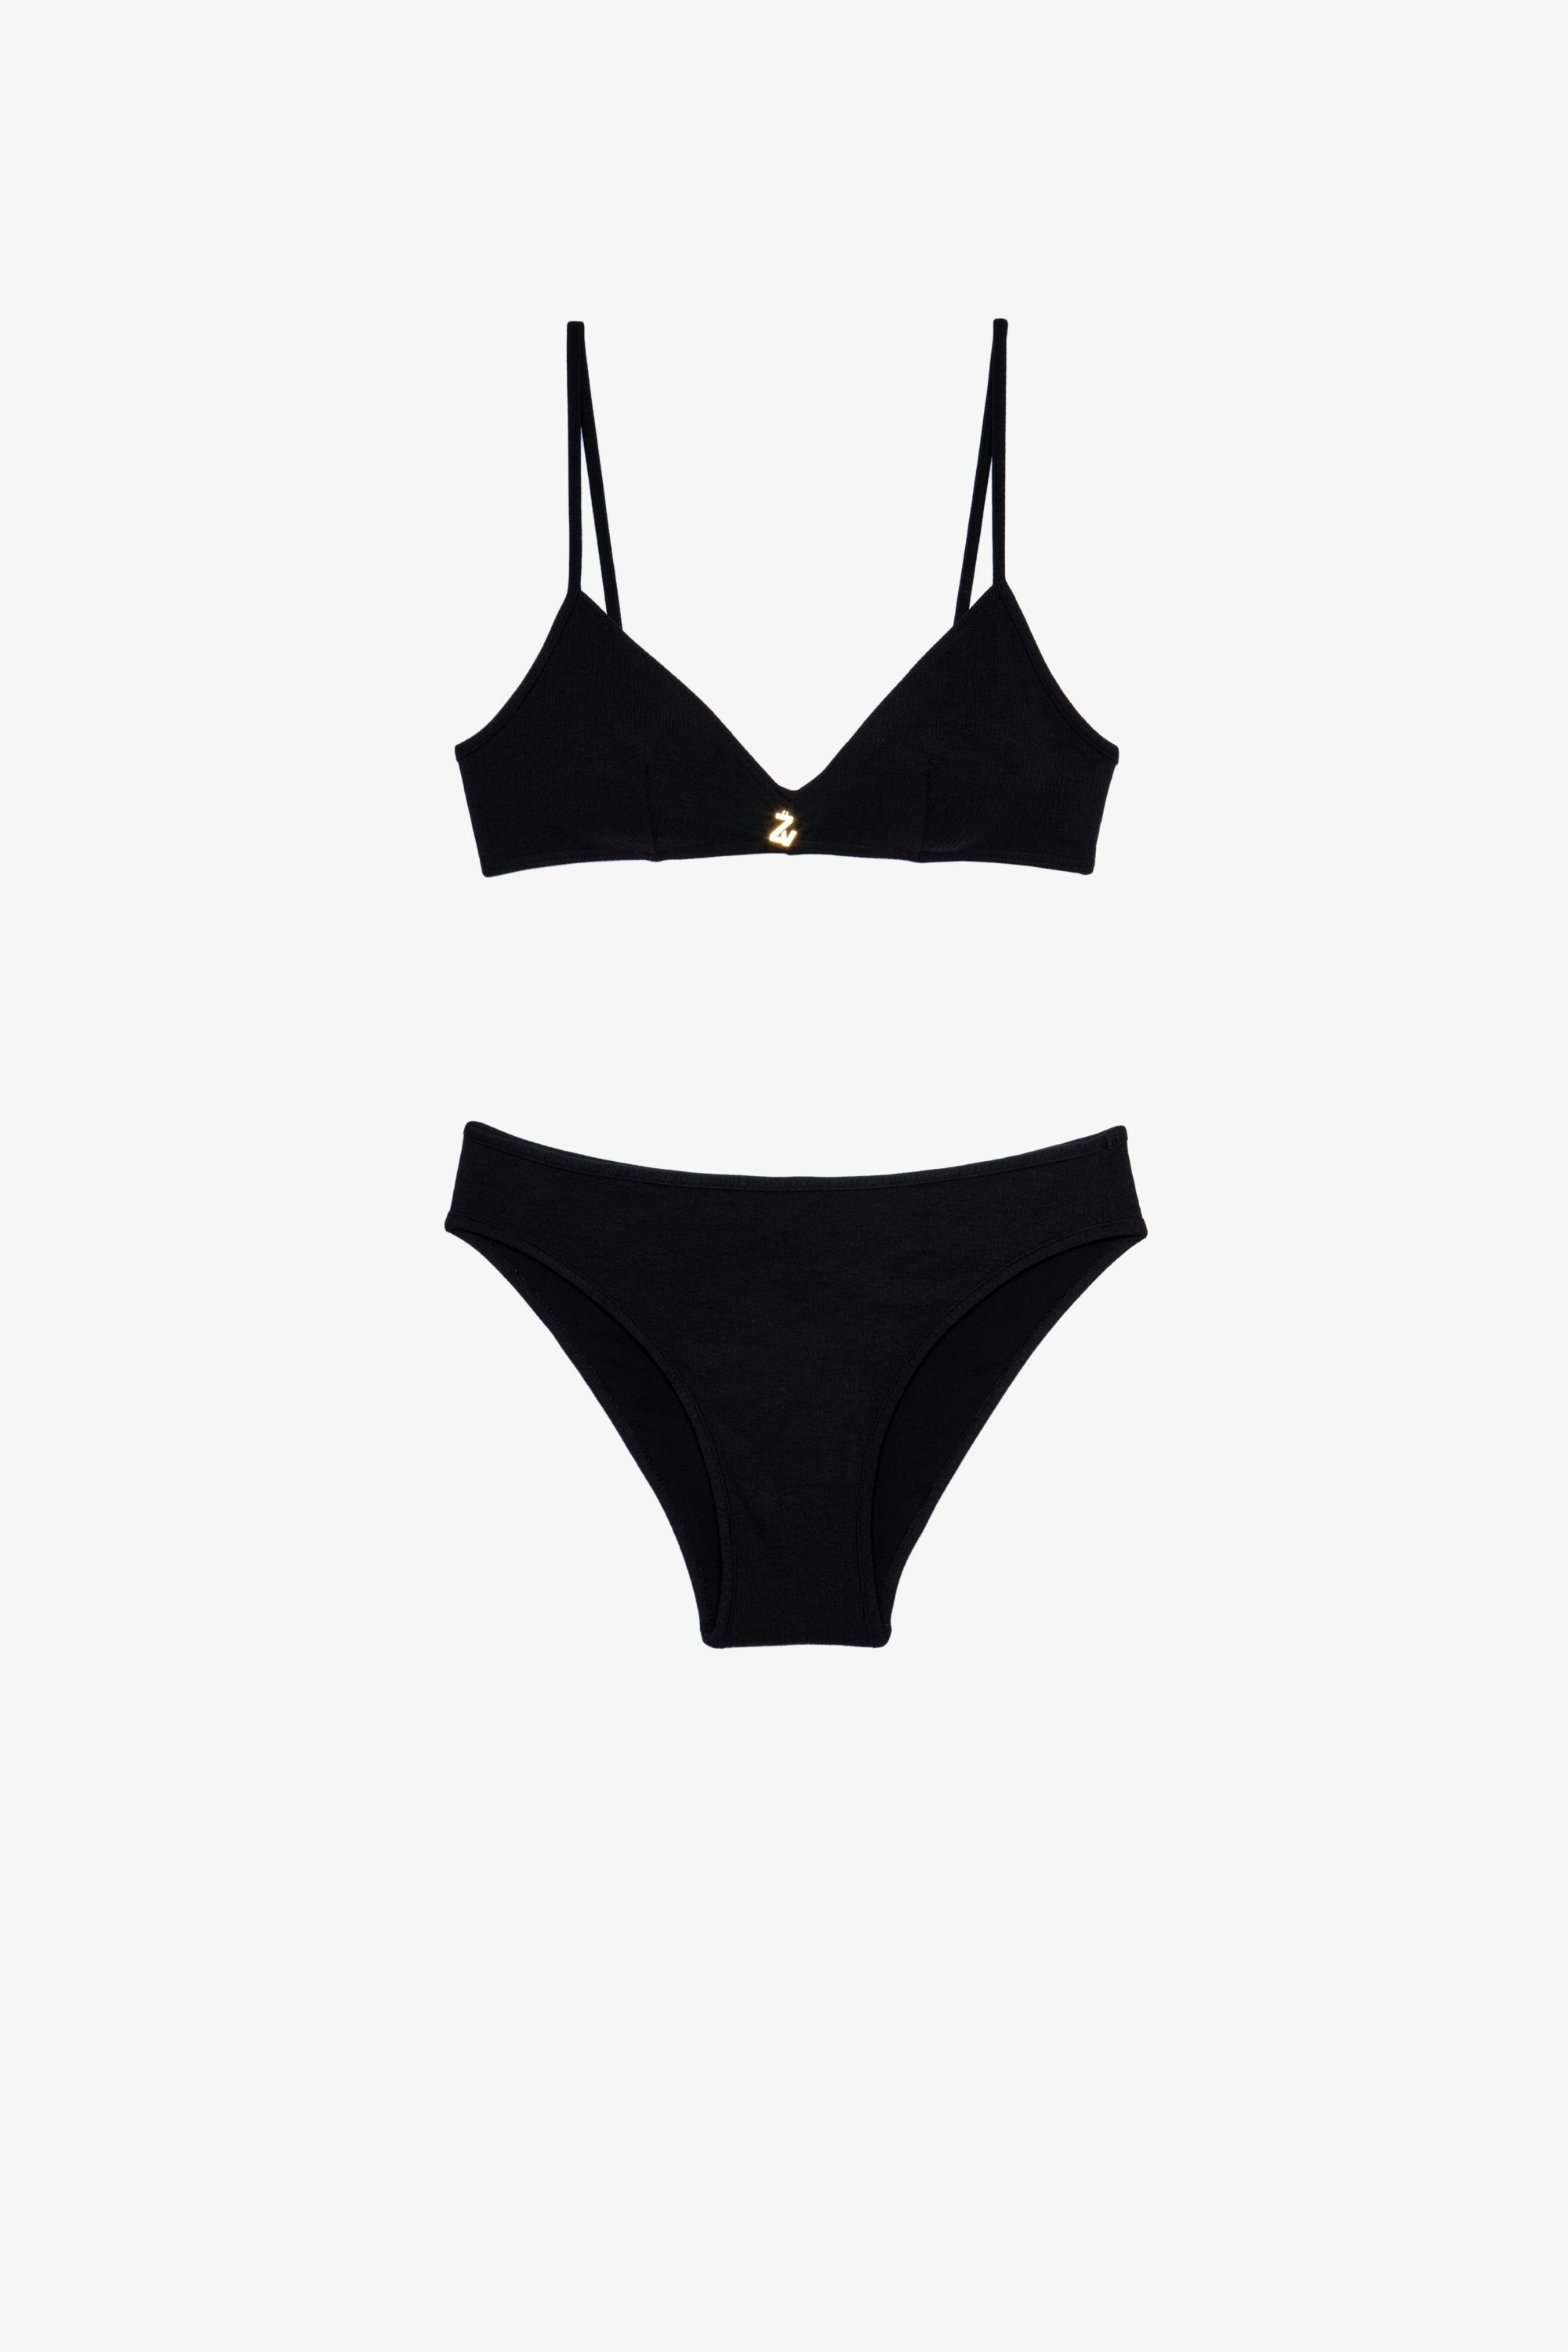 ZV Charm Eco Swimsuit 2-piece women's bikini in black